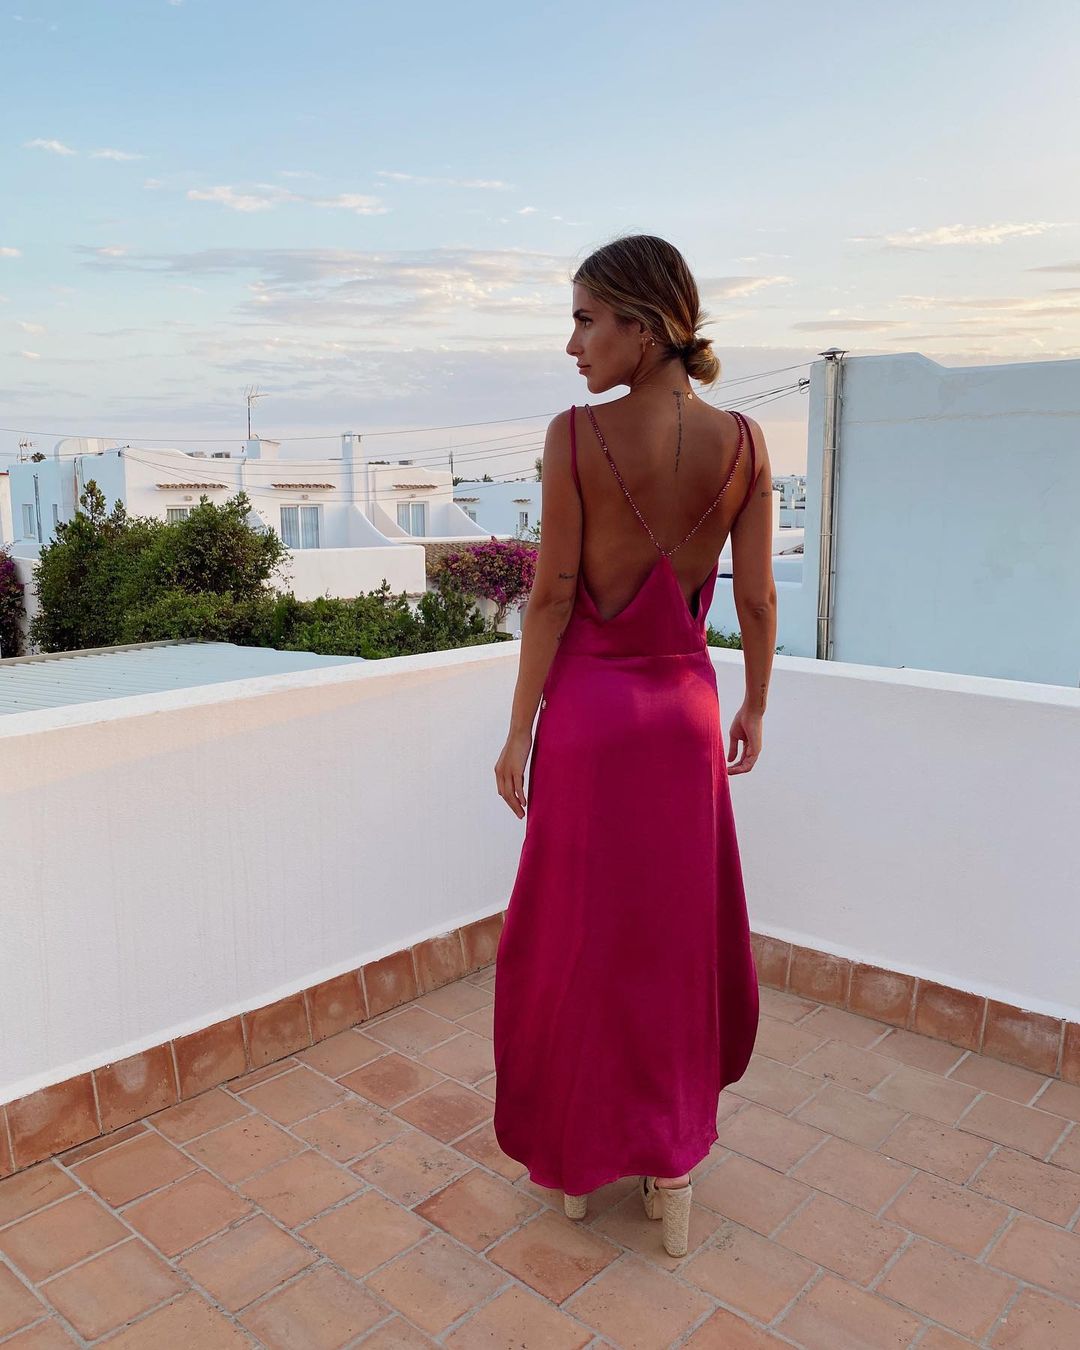 40 modelos de vestidos rosas para un look que no pasa desapercibido